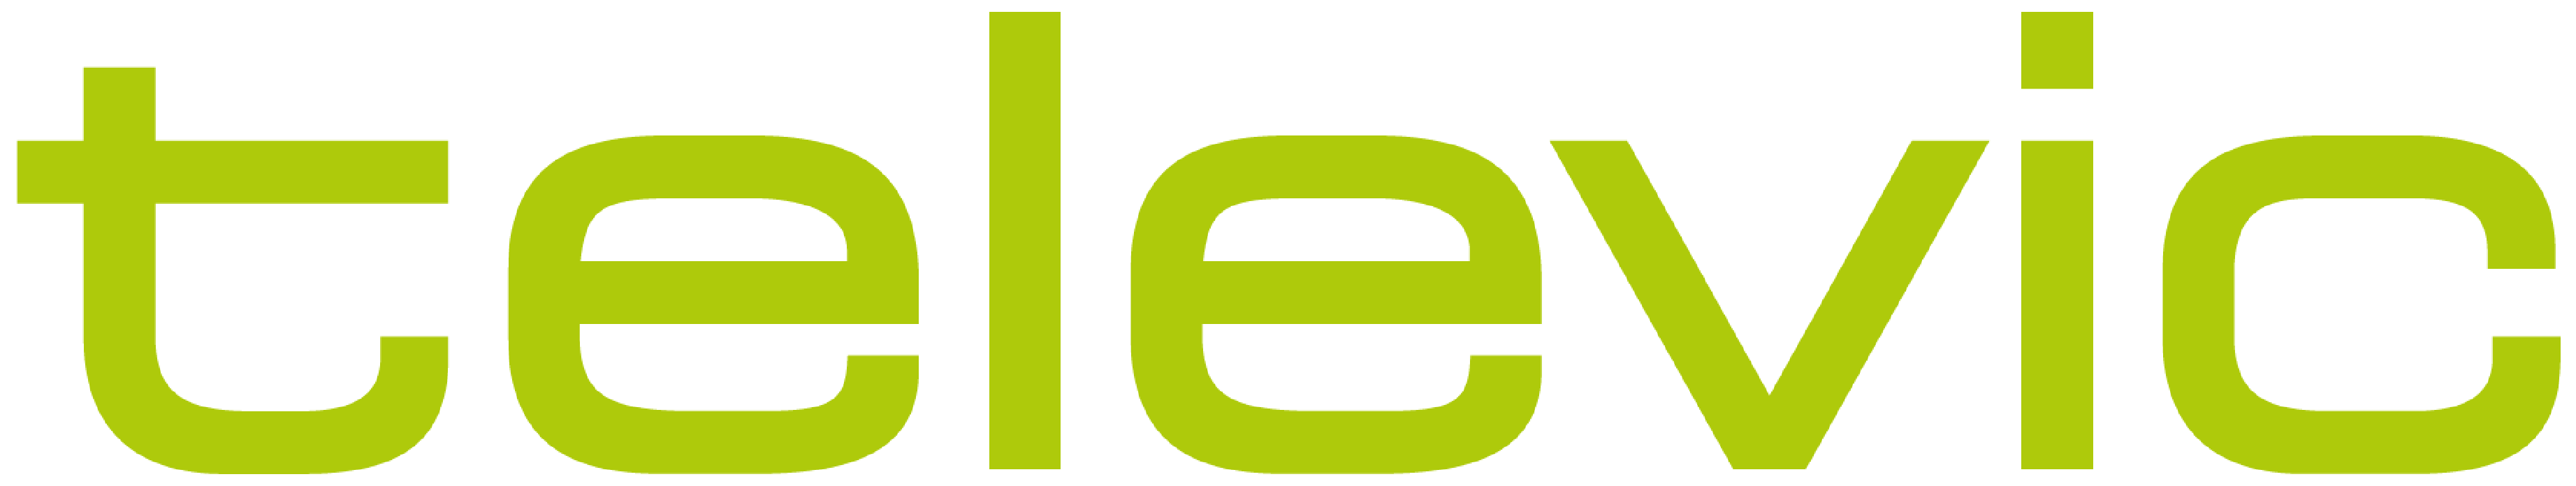 Logo entrée sybel-15